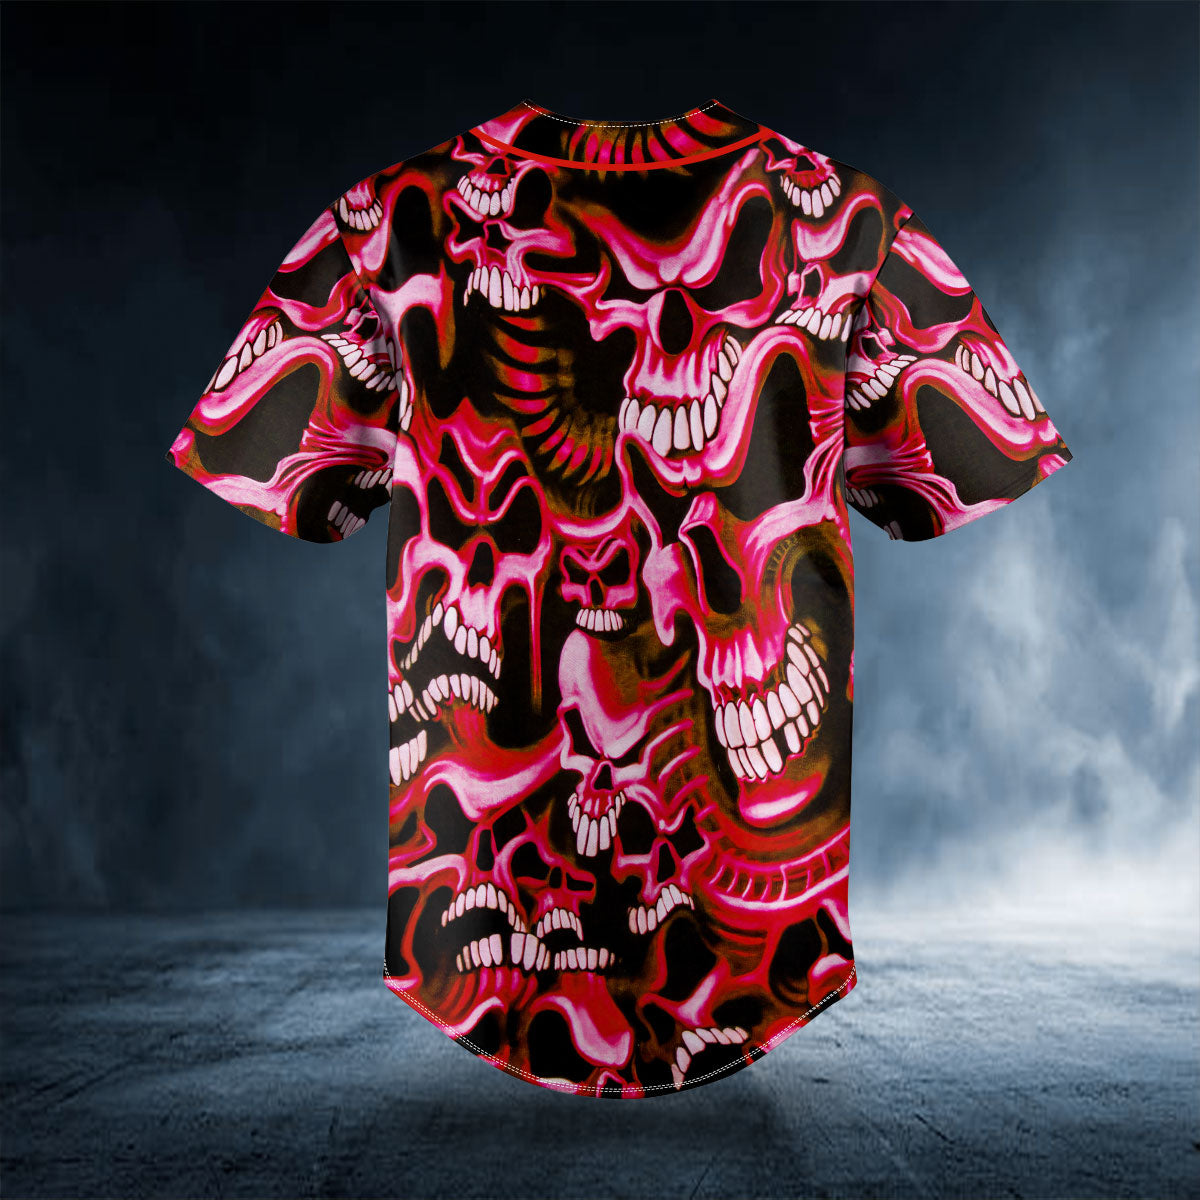 red smile pattern skull custom baseball jersey bsj 953 tlglt